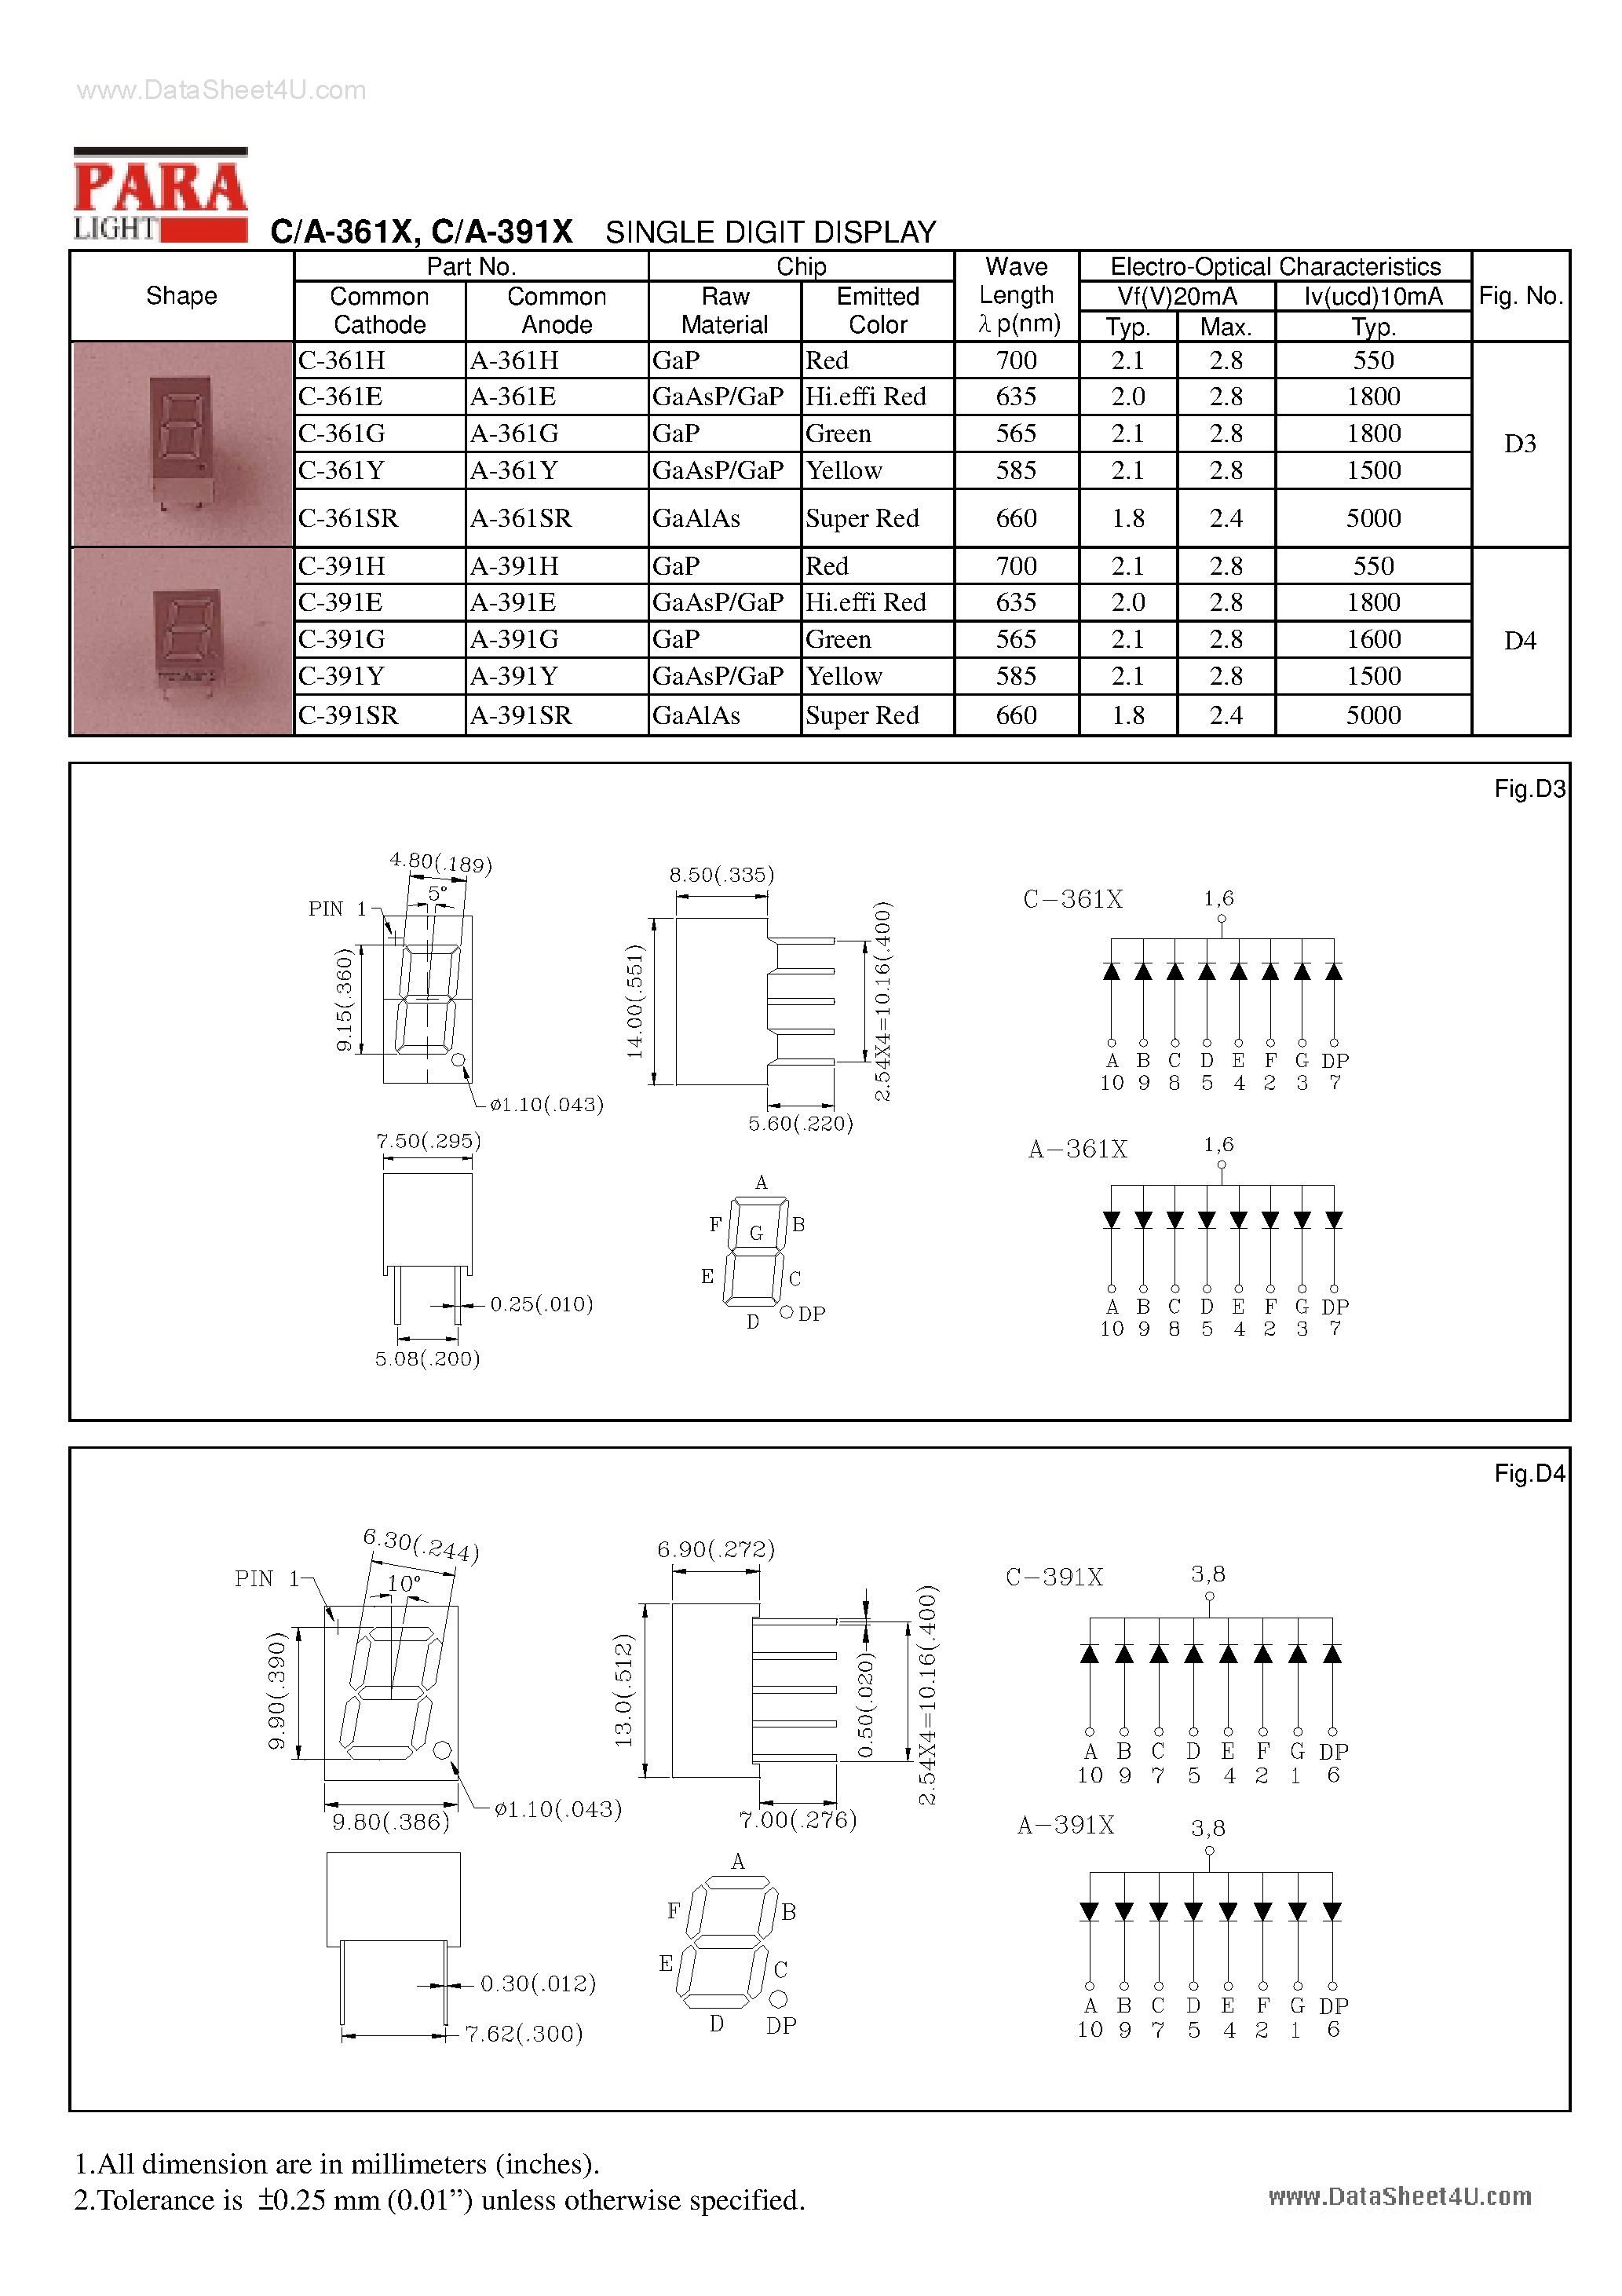 Datasheet A-361x - (A-391x / A-361x) SINGLE DIGIT DISPLAY page 1